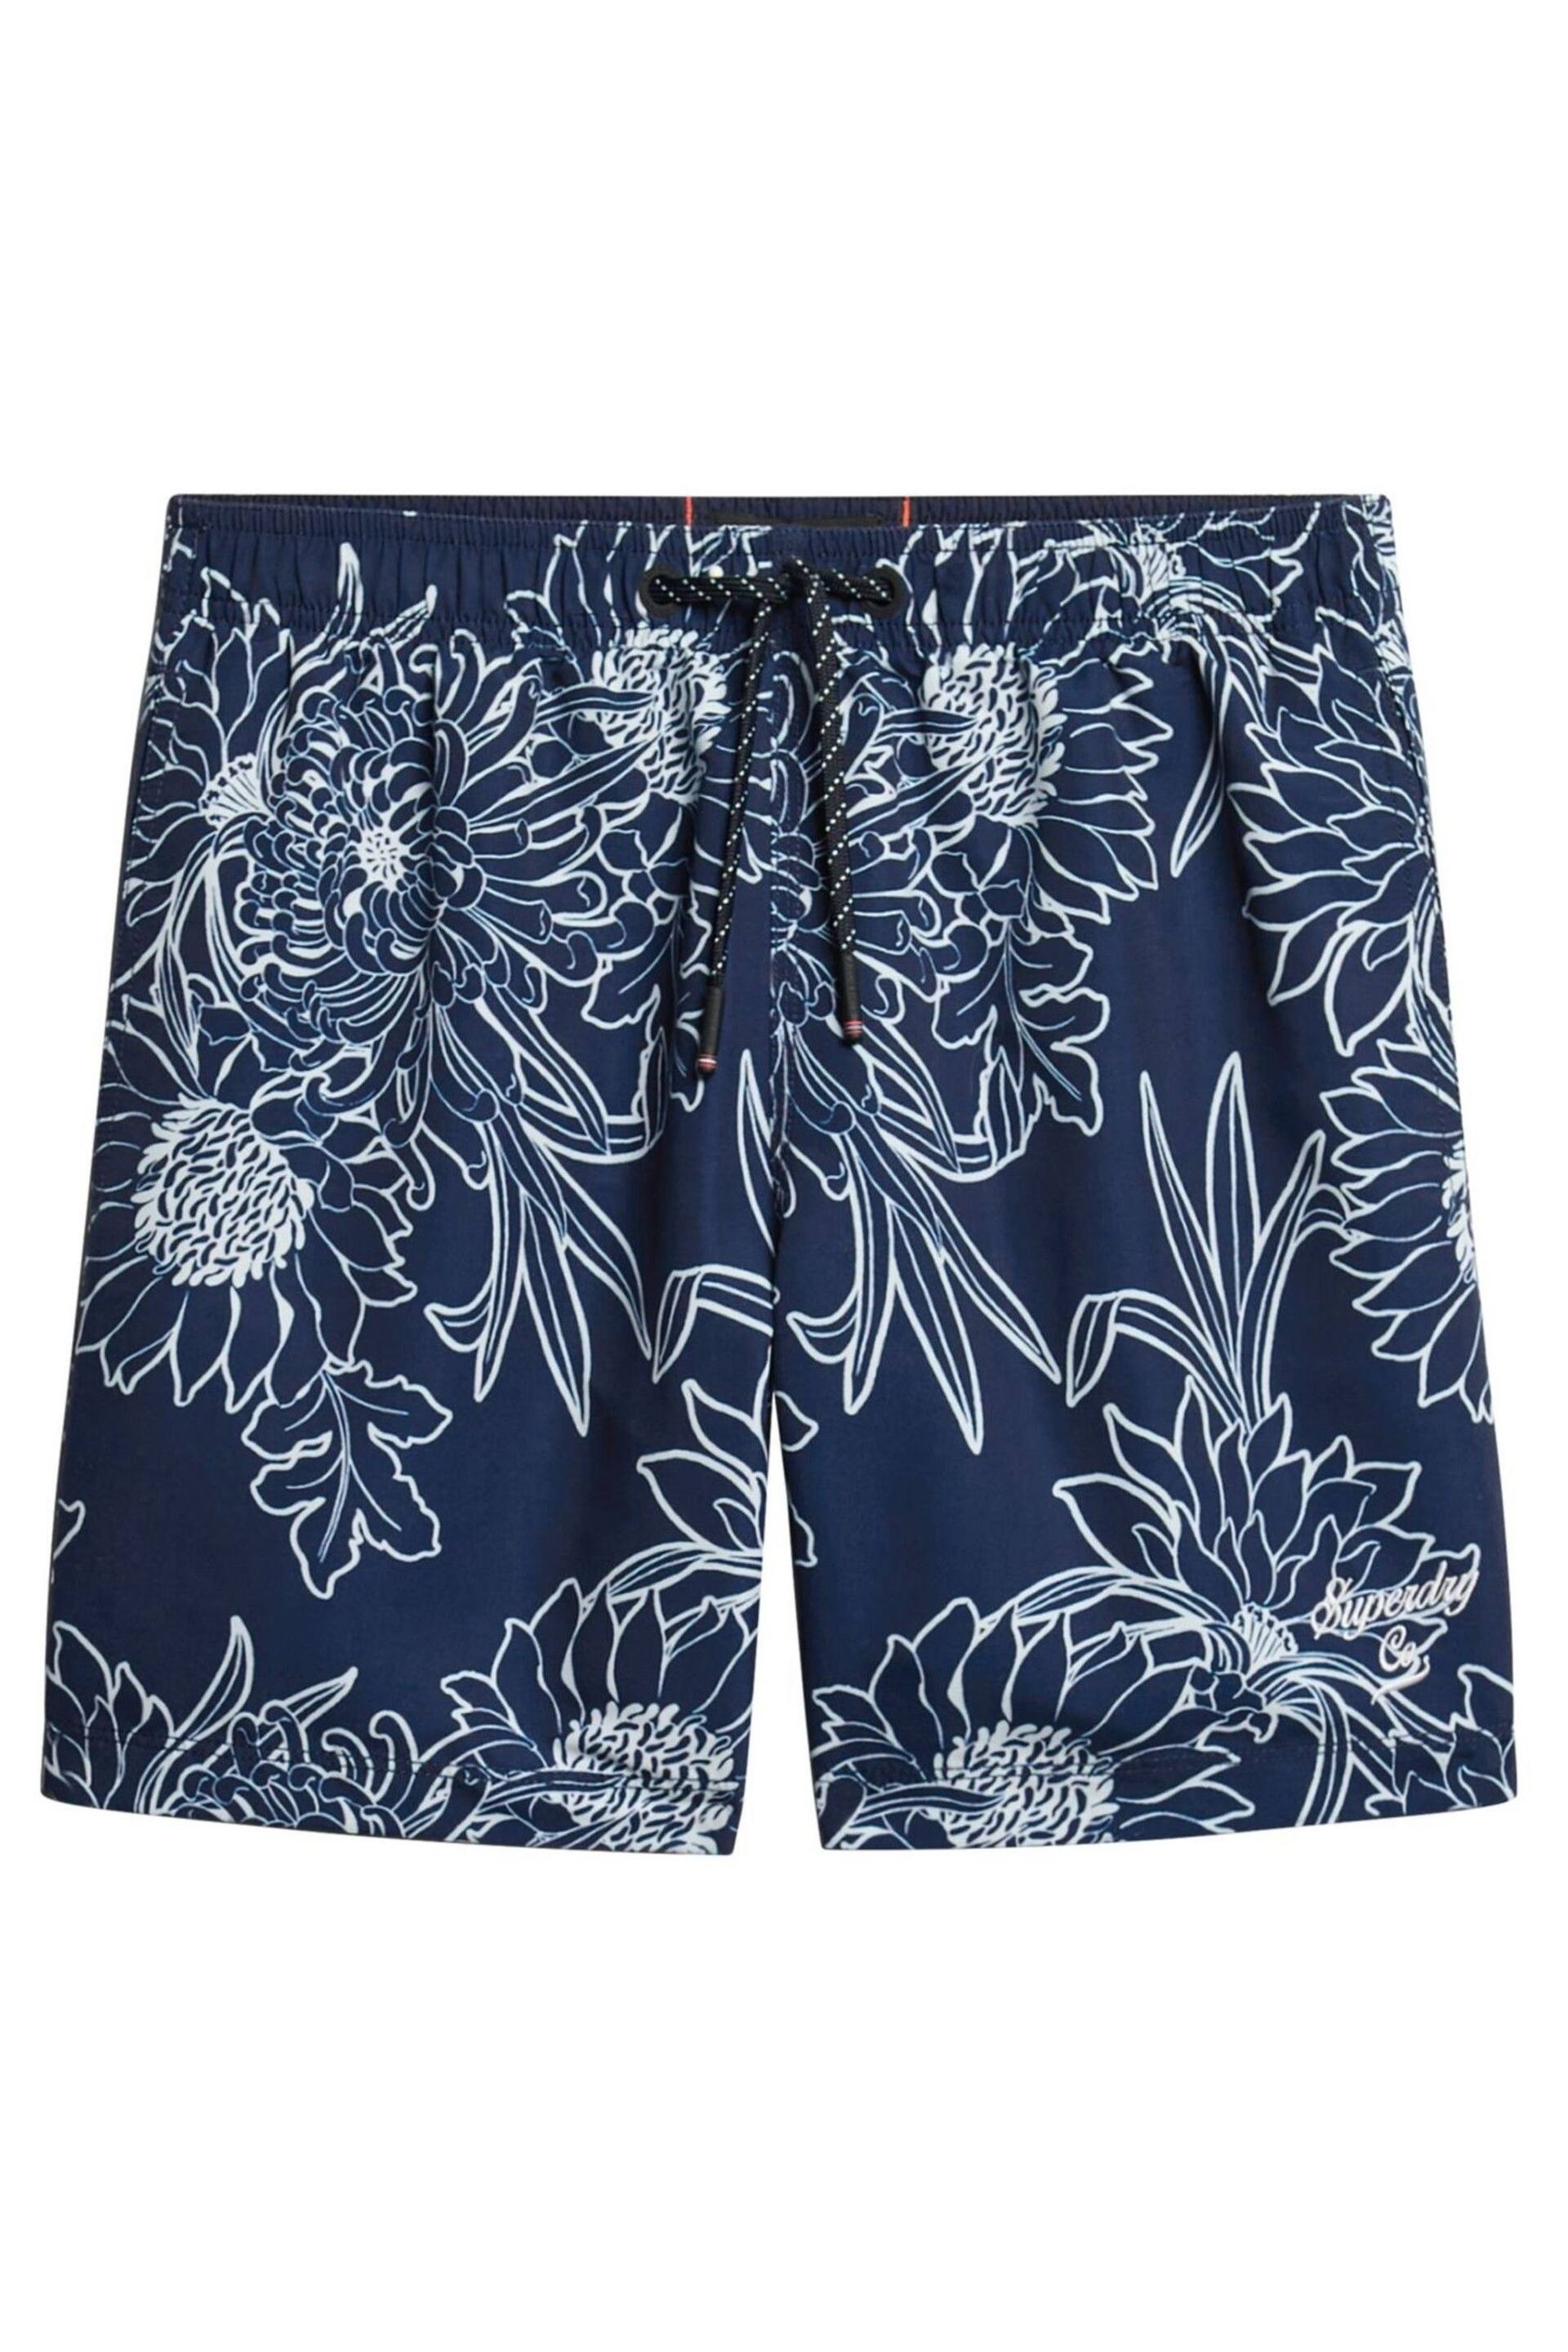 Superdry Blue Printed 15" Swim Shorts - Image 5 of 7